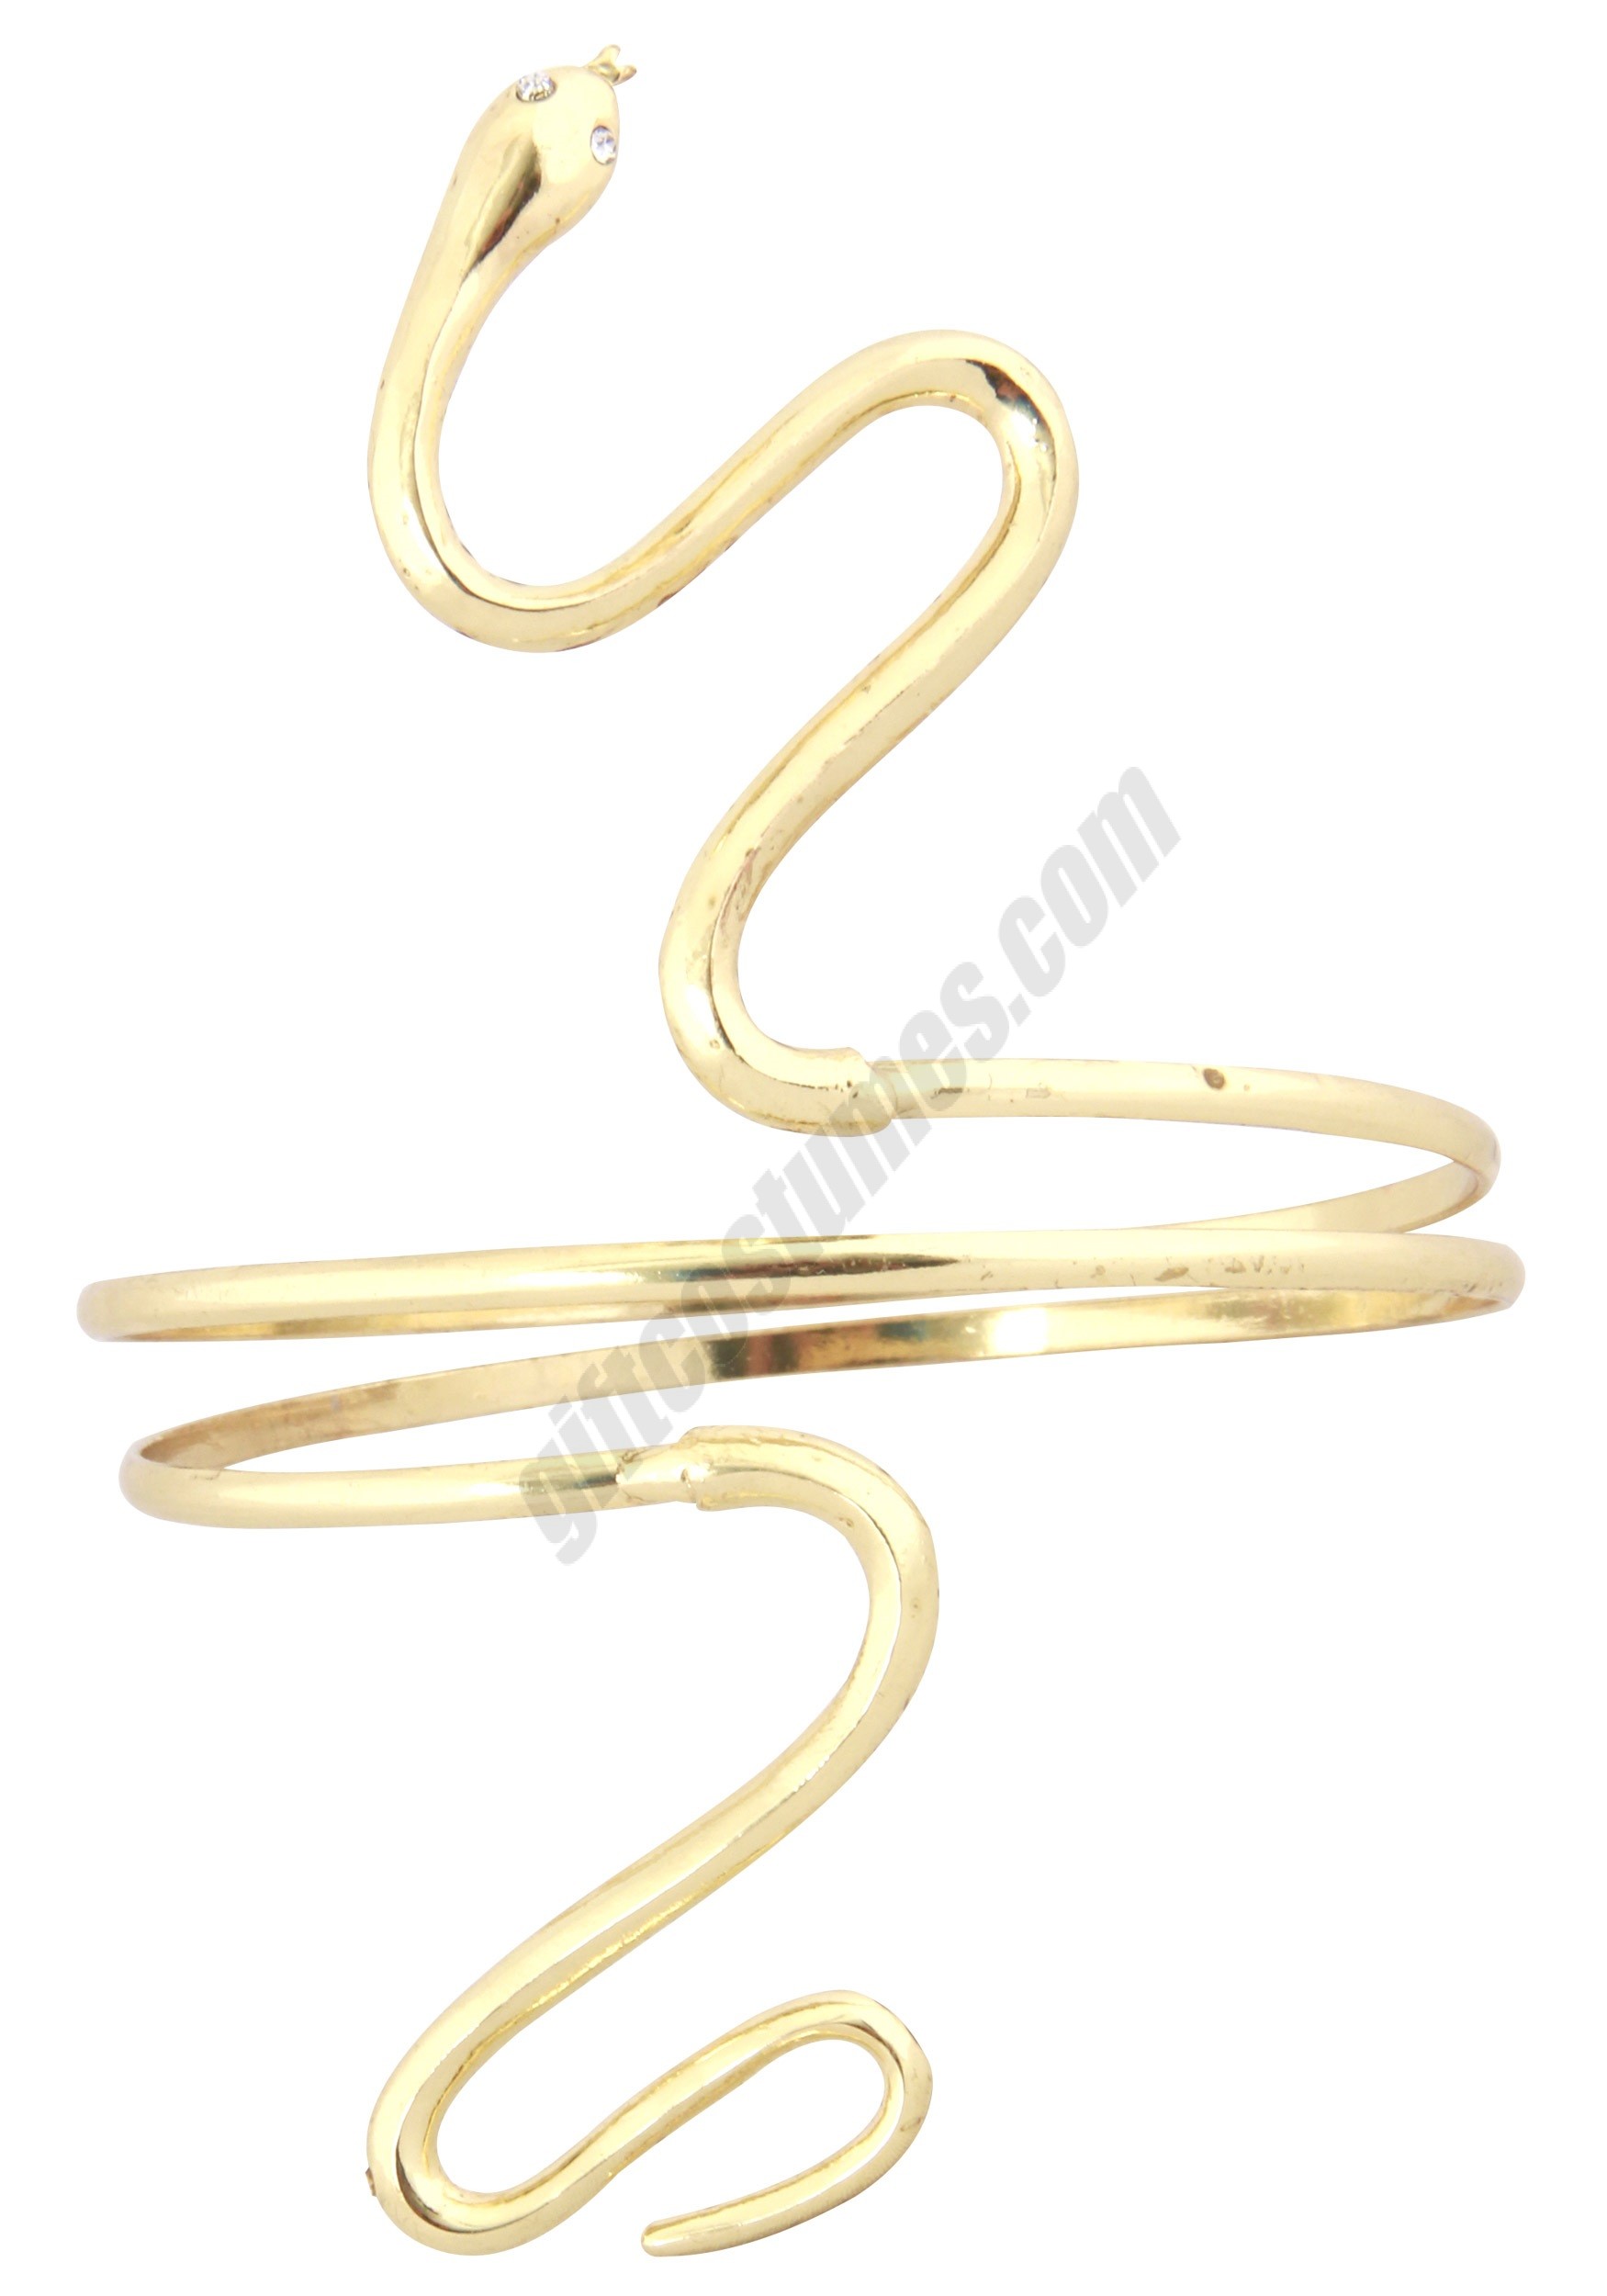 Gold Snake Armband Promotions - Gold Snake Armband Promotions